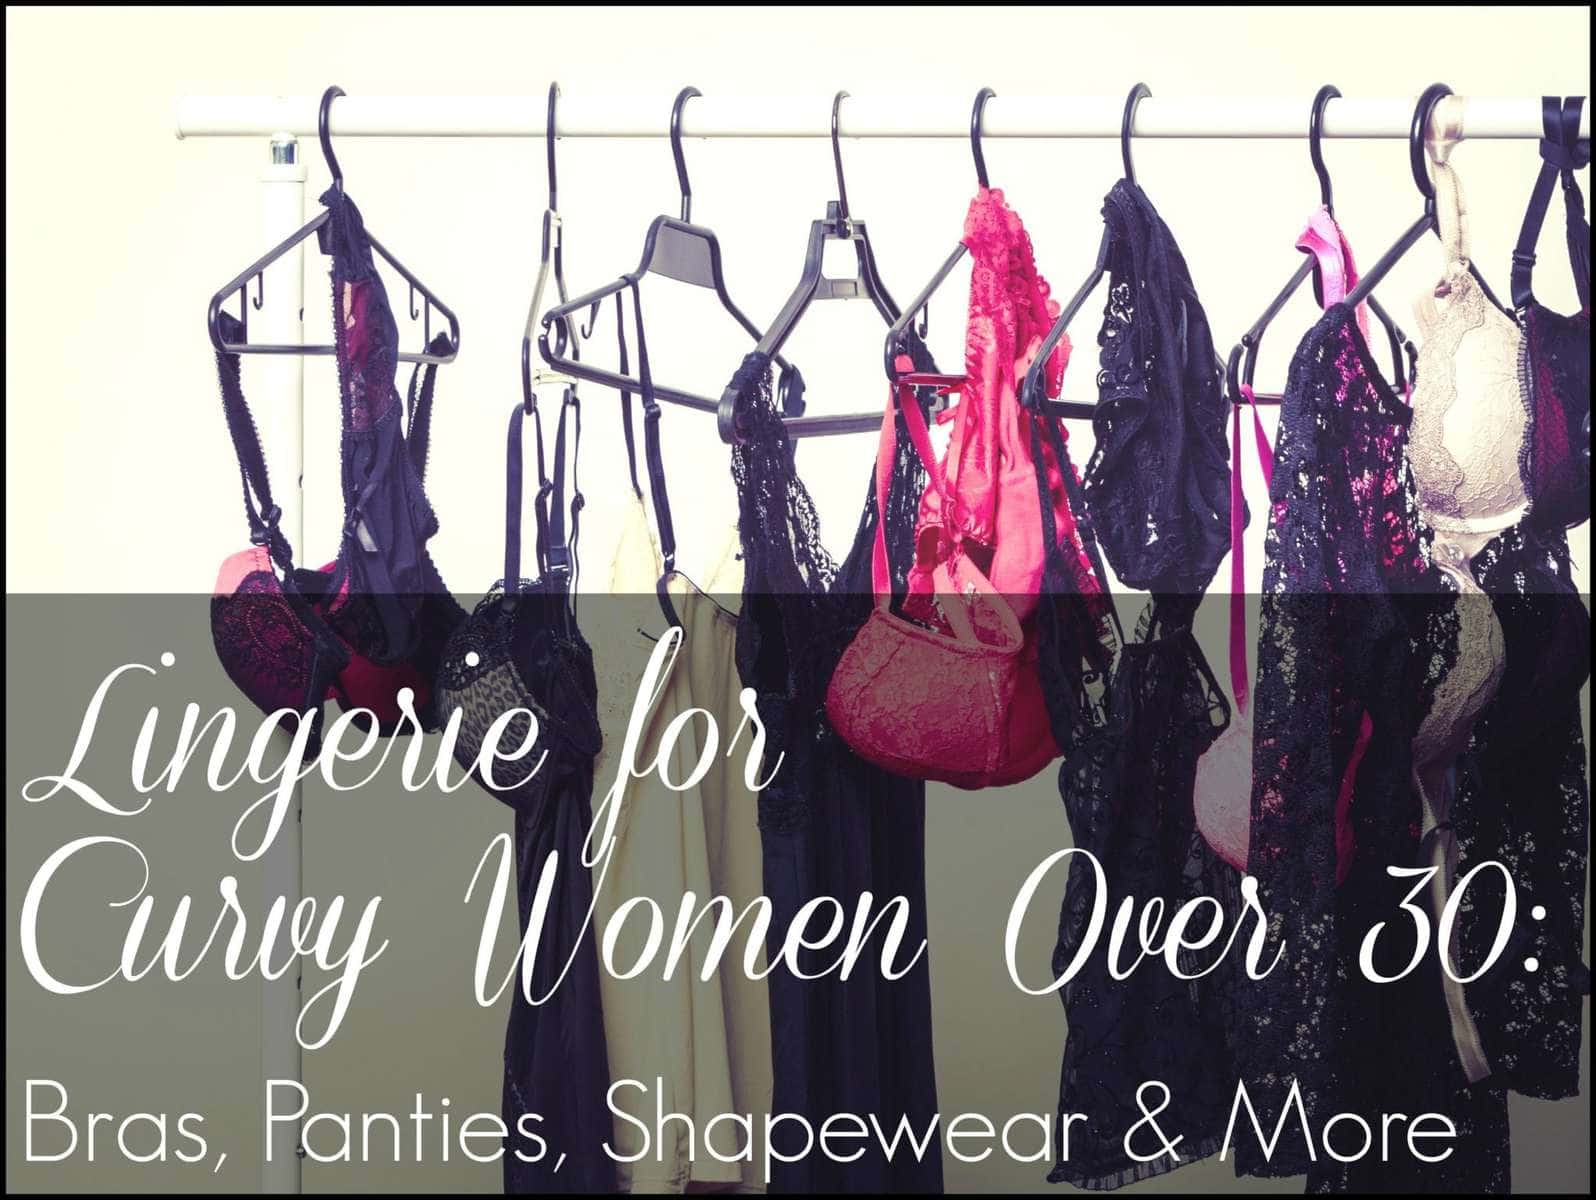 https://www.wardrobeoxygen.com/wp-content/uploads/2016/02/best-lingerie-for-curvy-women-over-30.jpg